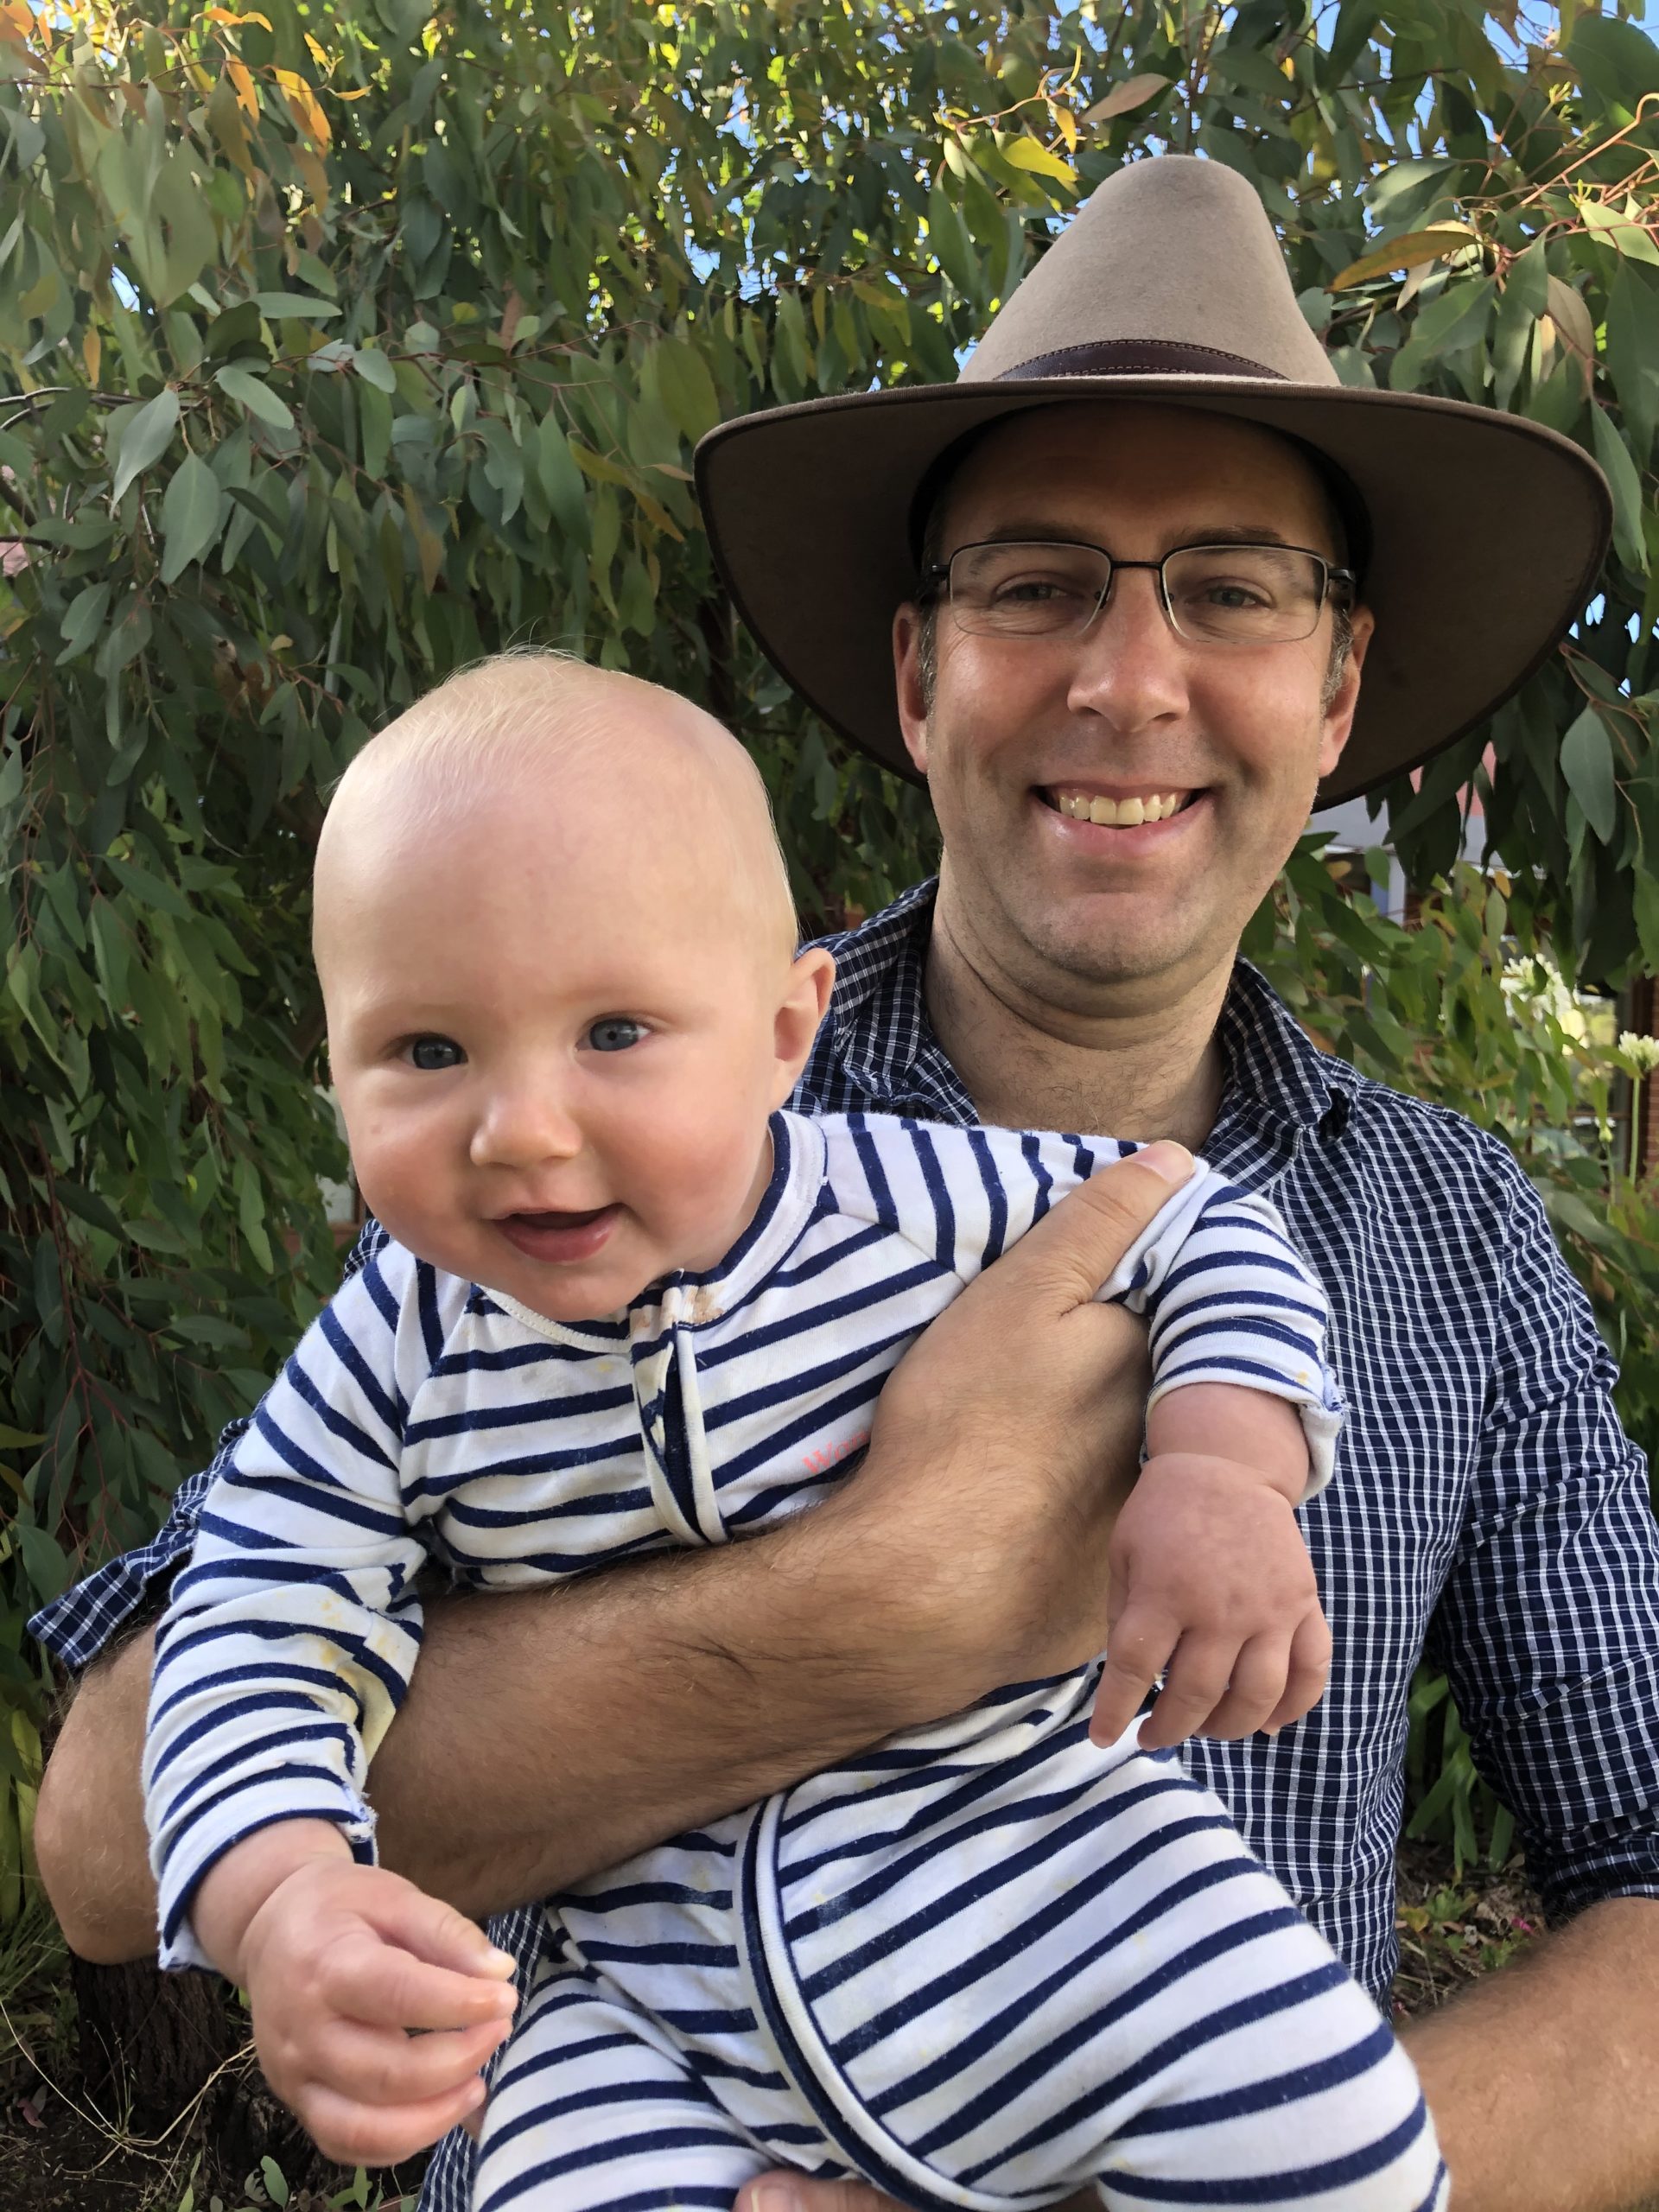 Dr Daniel Thomas with son at the farm